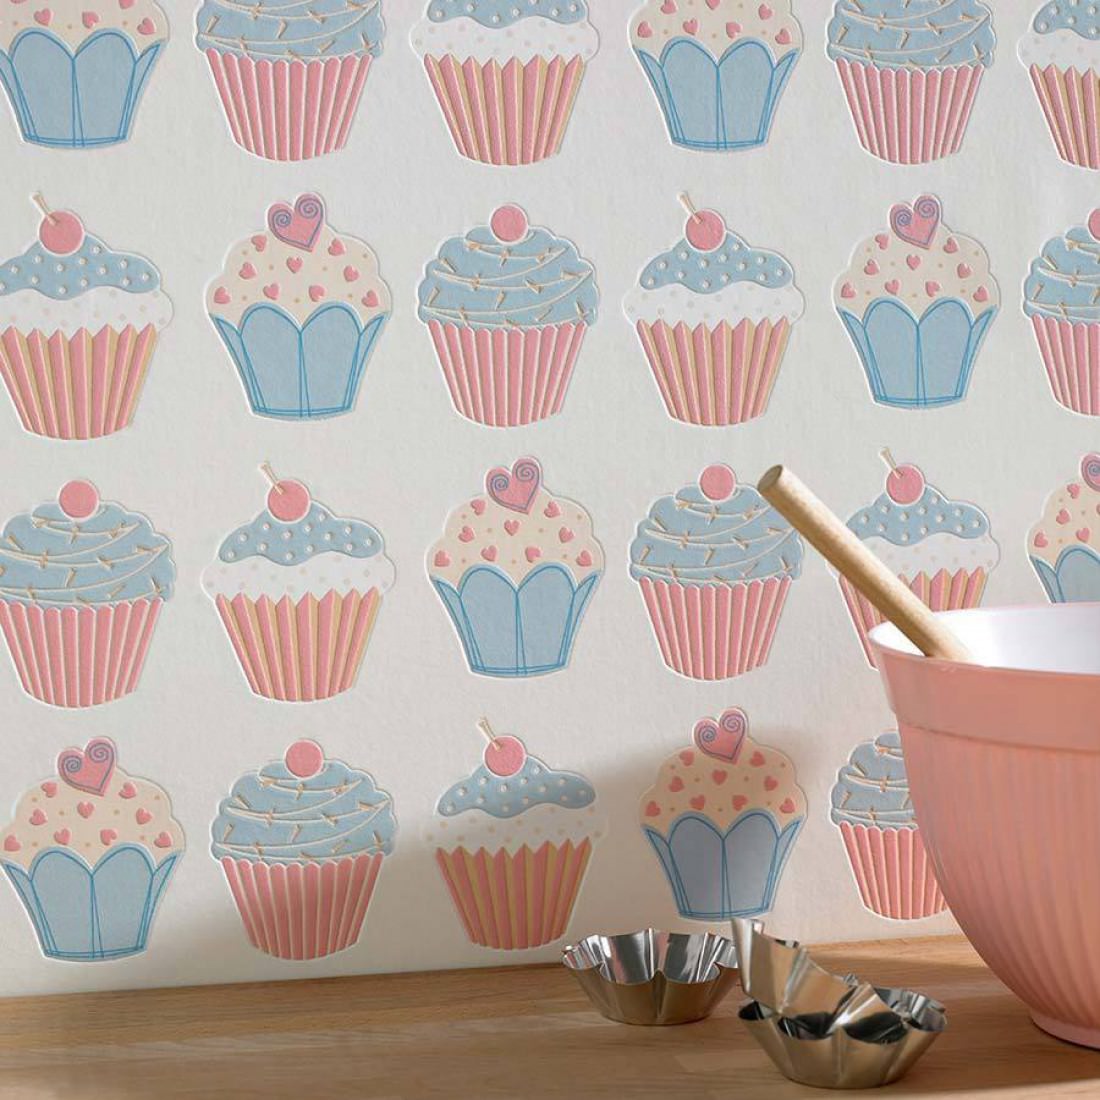 Cupcake Wallpaper For Kitchen - HD Wallpaper 